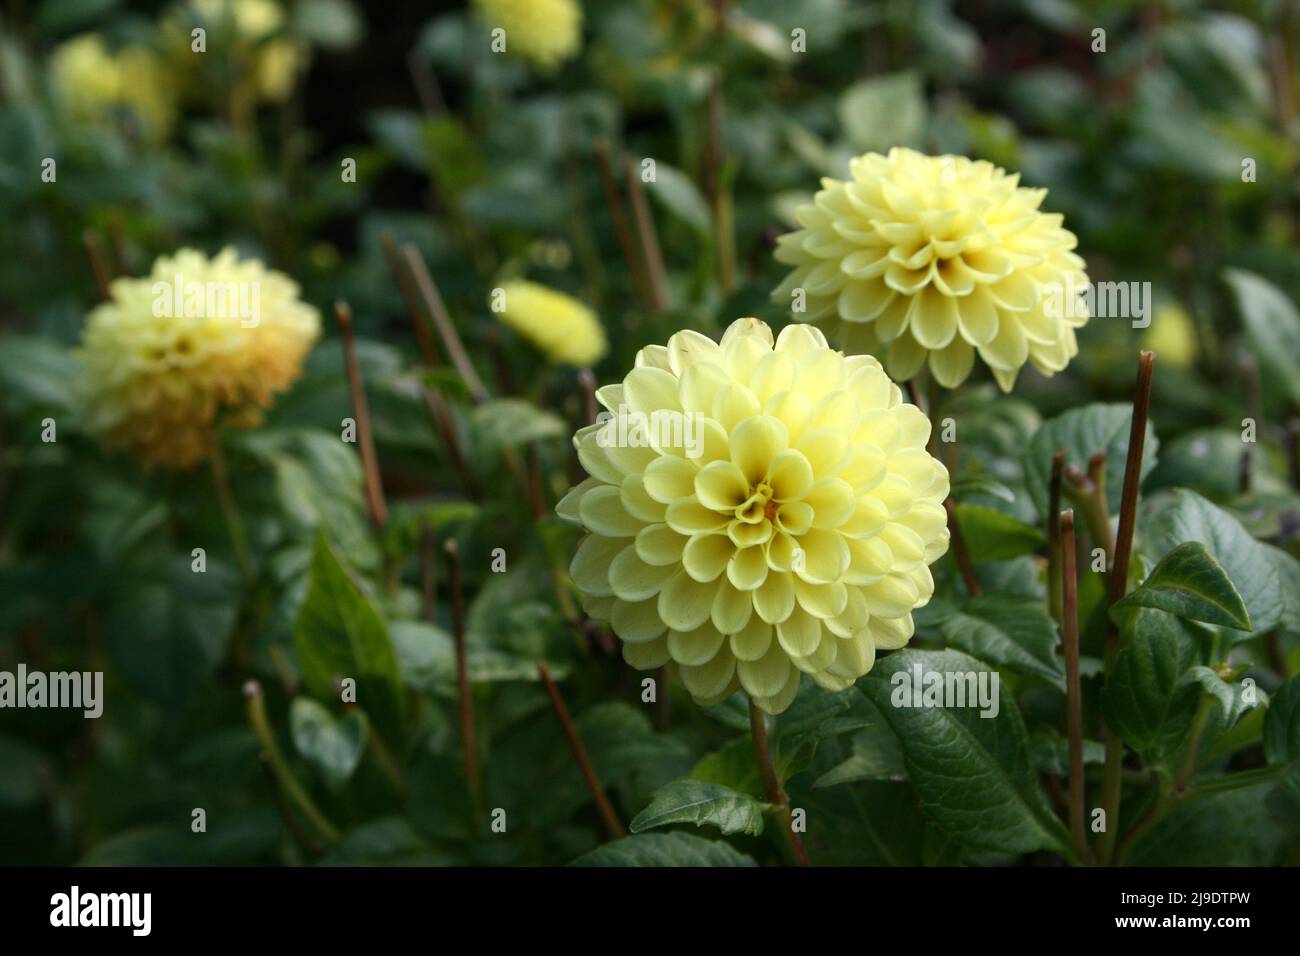 DAHLIAS FLOWERS 'SUSIE DAHL' IN BLOOM Stock Photo